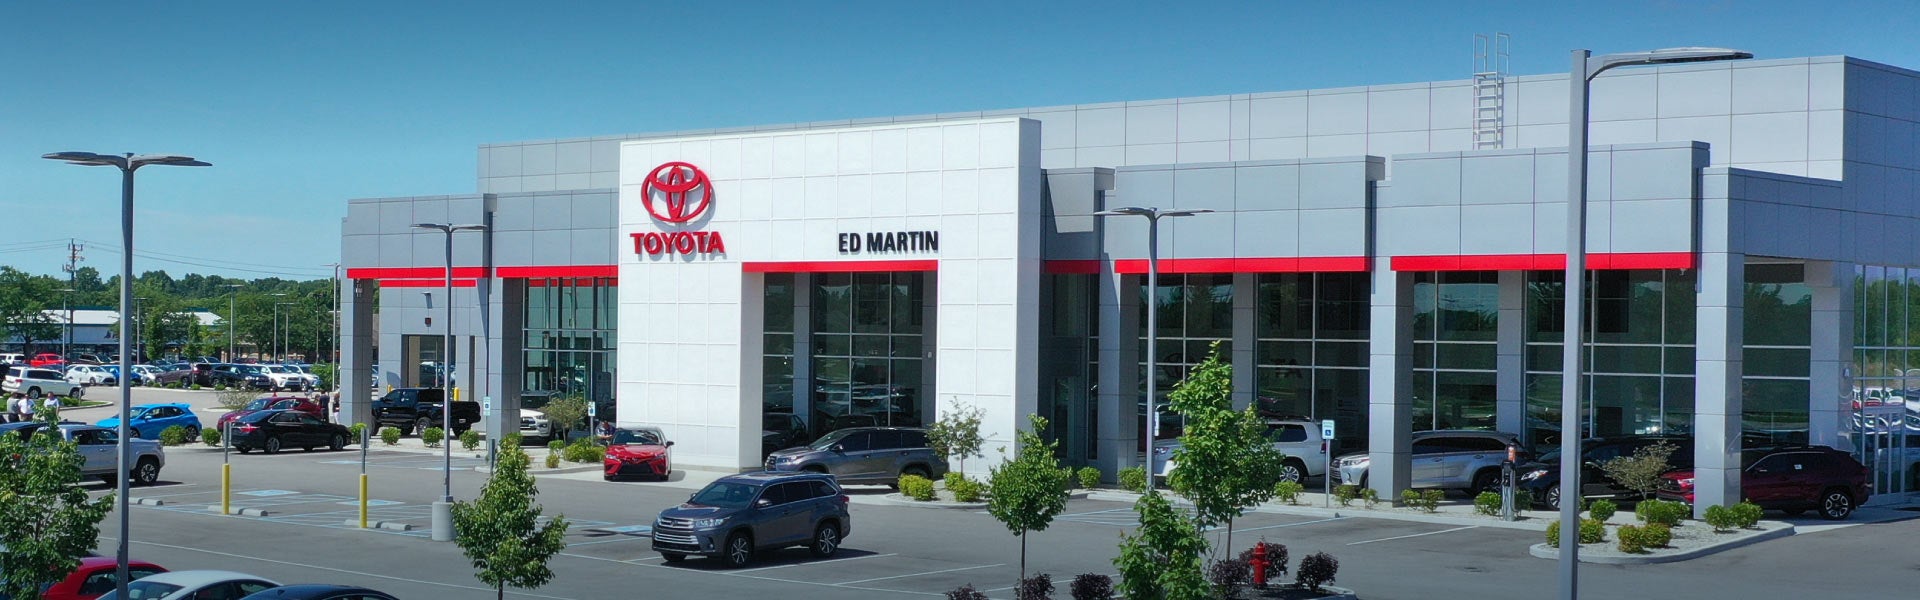 Ed Martin Toyota Dealership near Carmel, Indiana